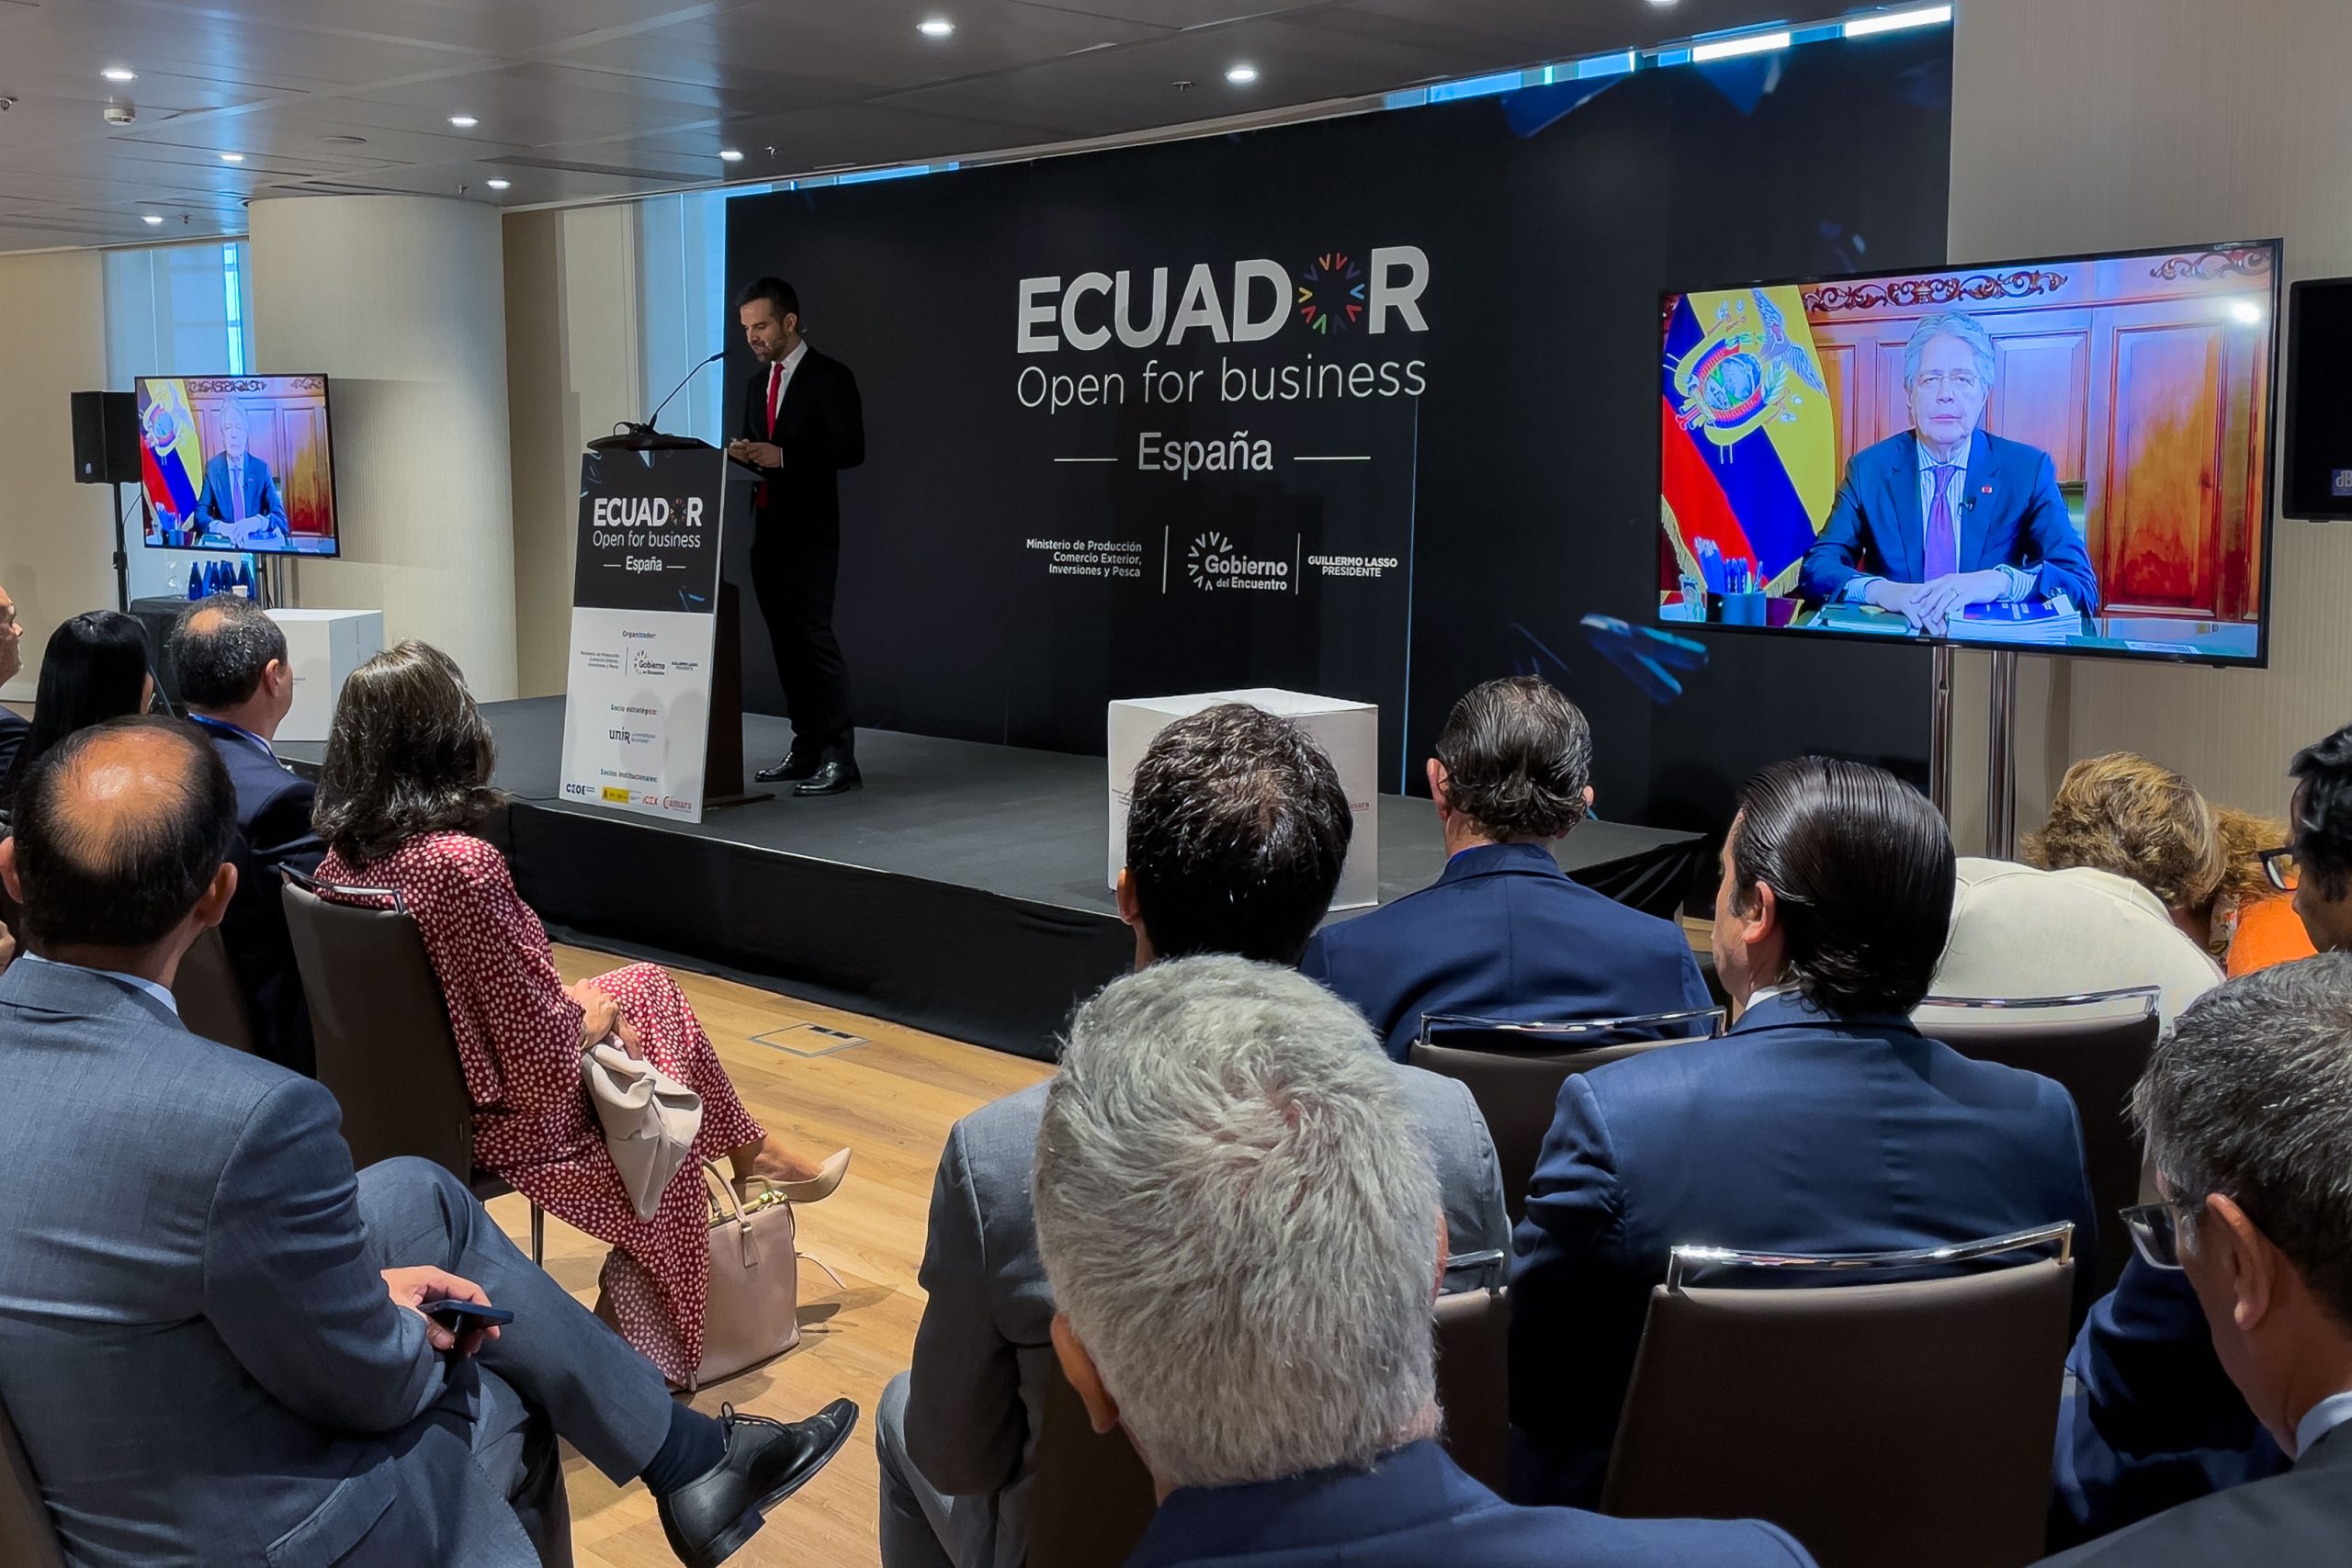 Foro de inversiones Ecuador Open for Business de Madrid